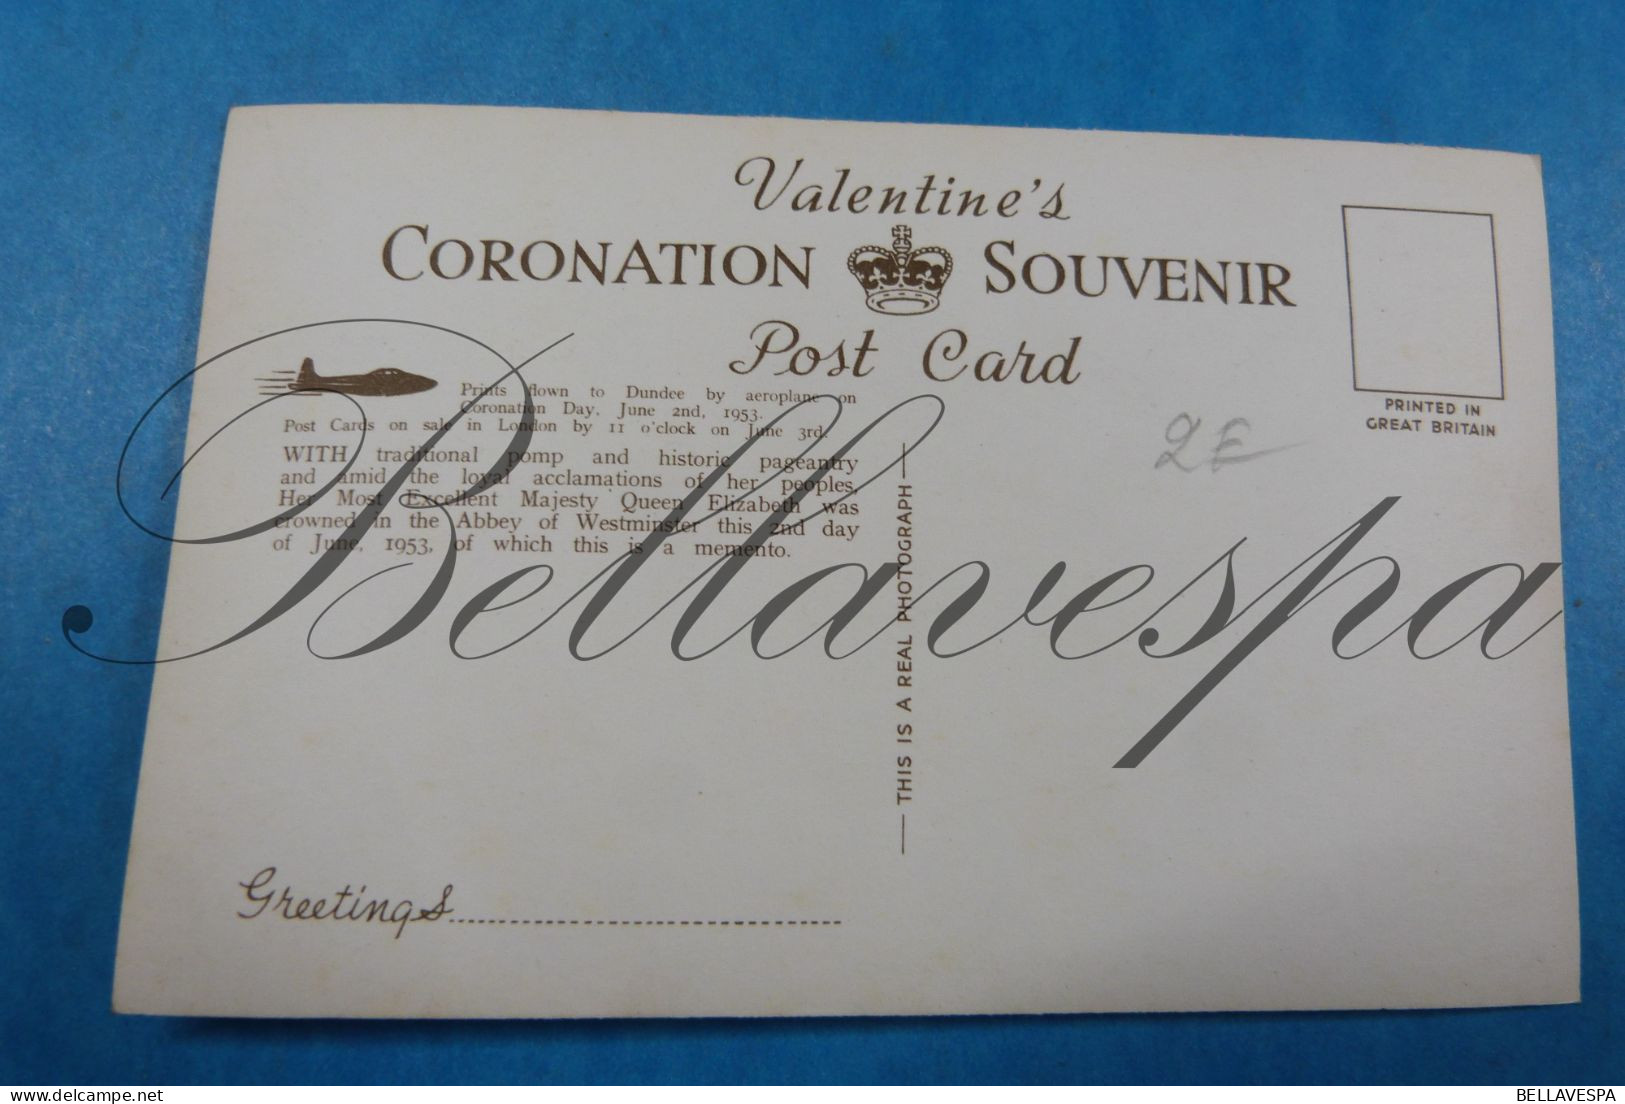 Royal  United Kingdom   The Majesty Queen Elisabeth Crowned 1953 Lot x 9 postcards Valentine's